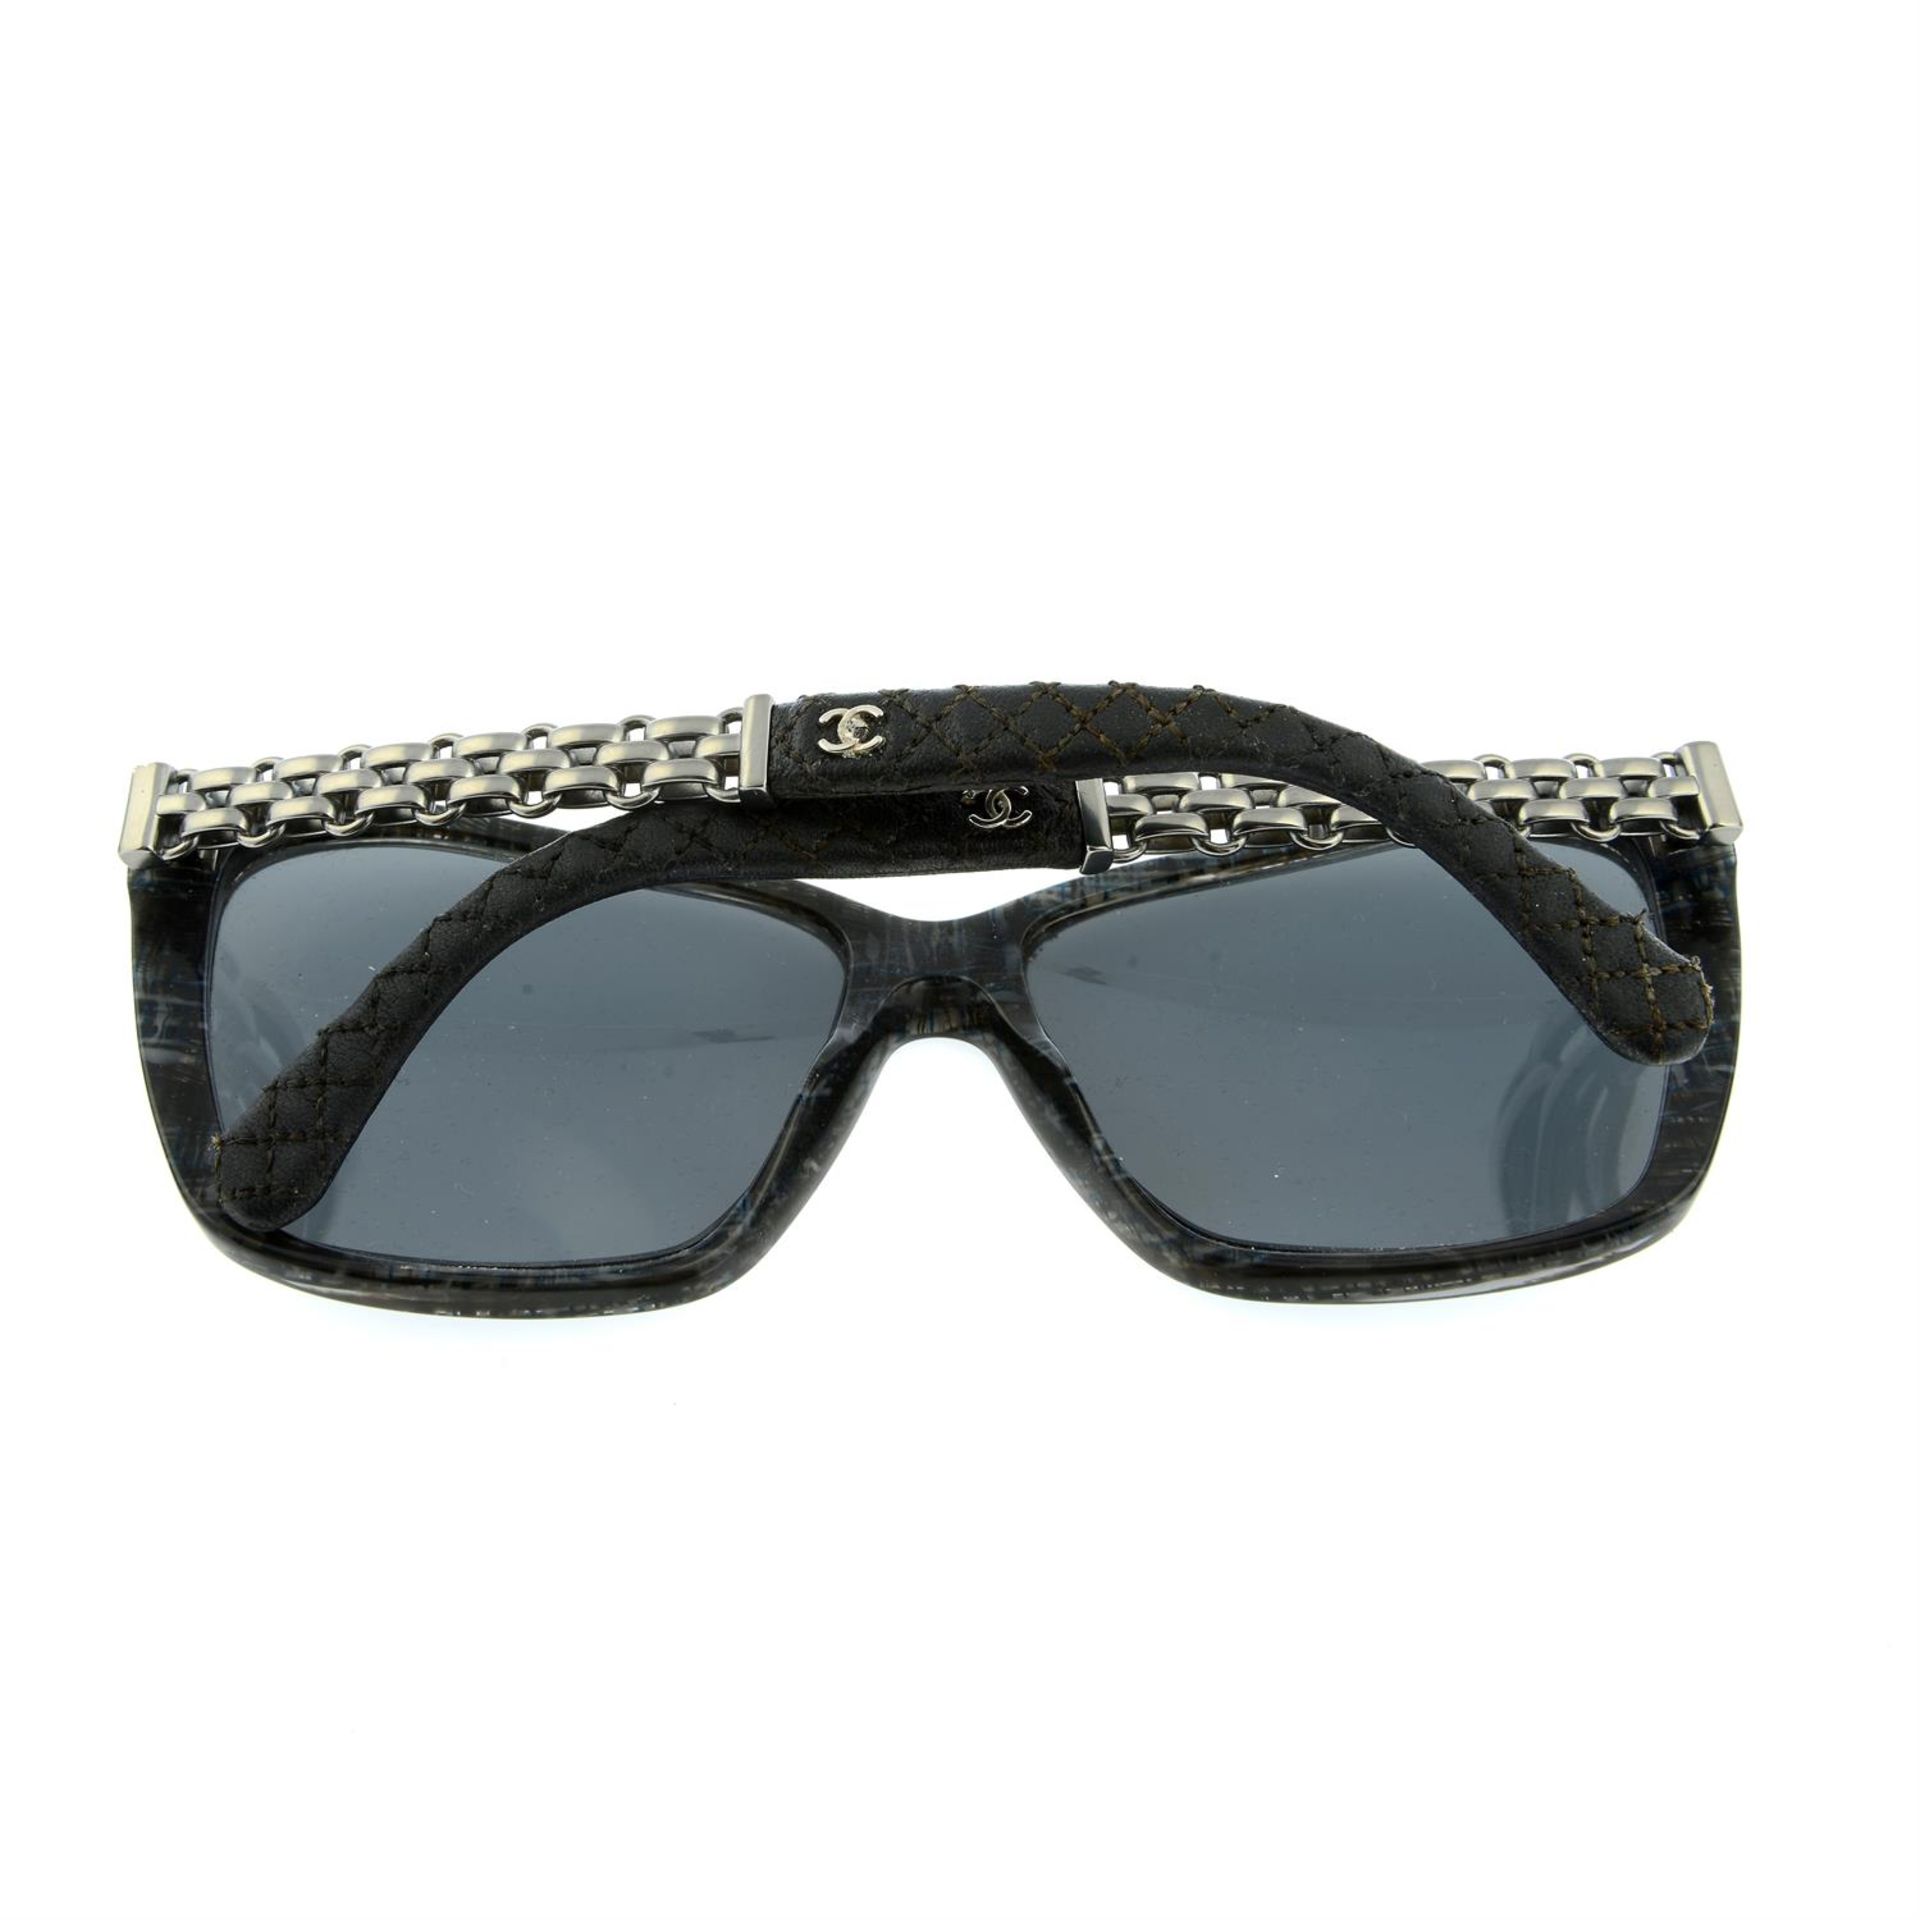 CHANEL - a pair of prescription sunglasses. - Image 2 of 3